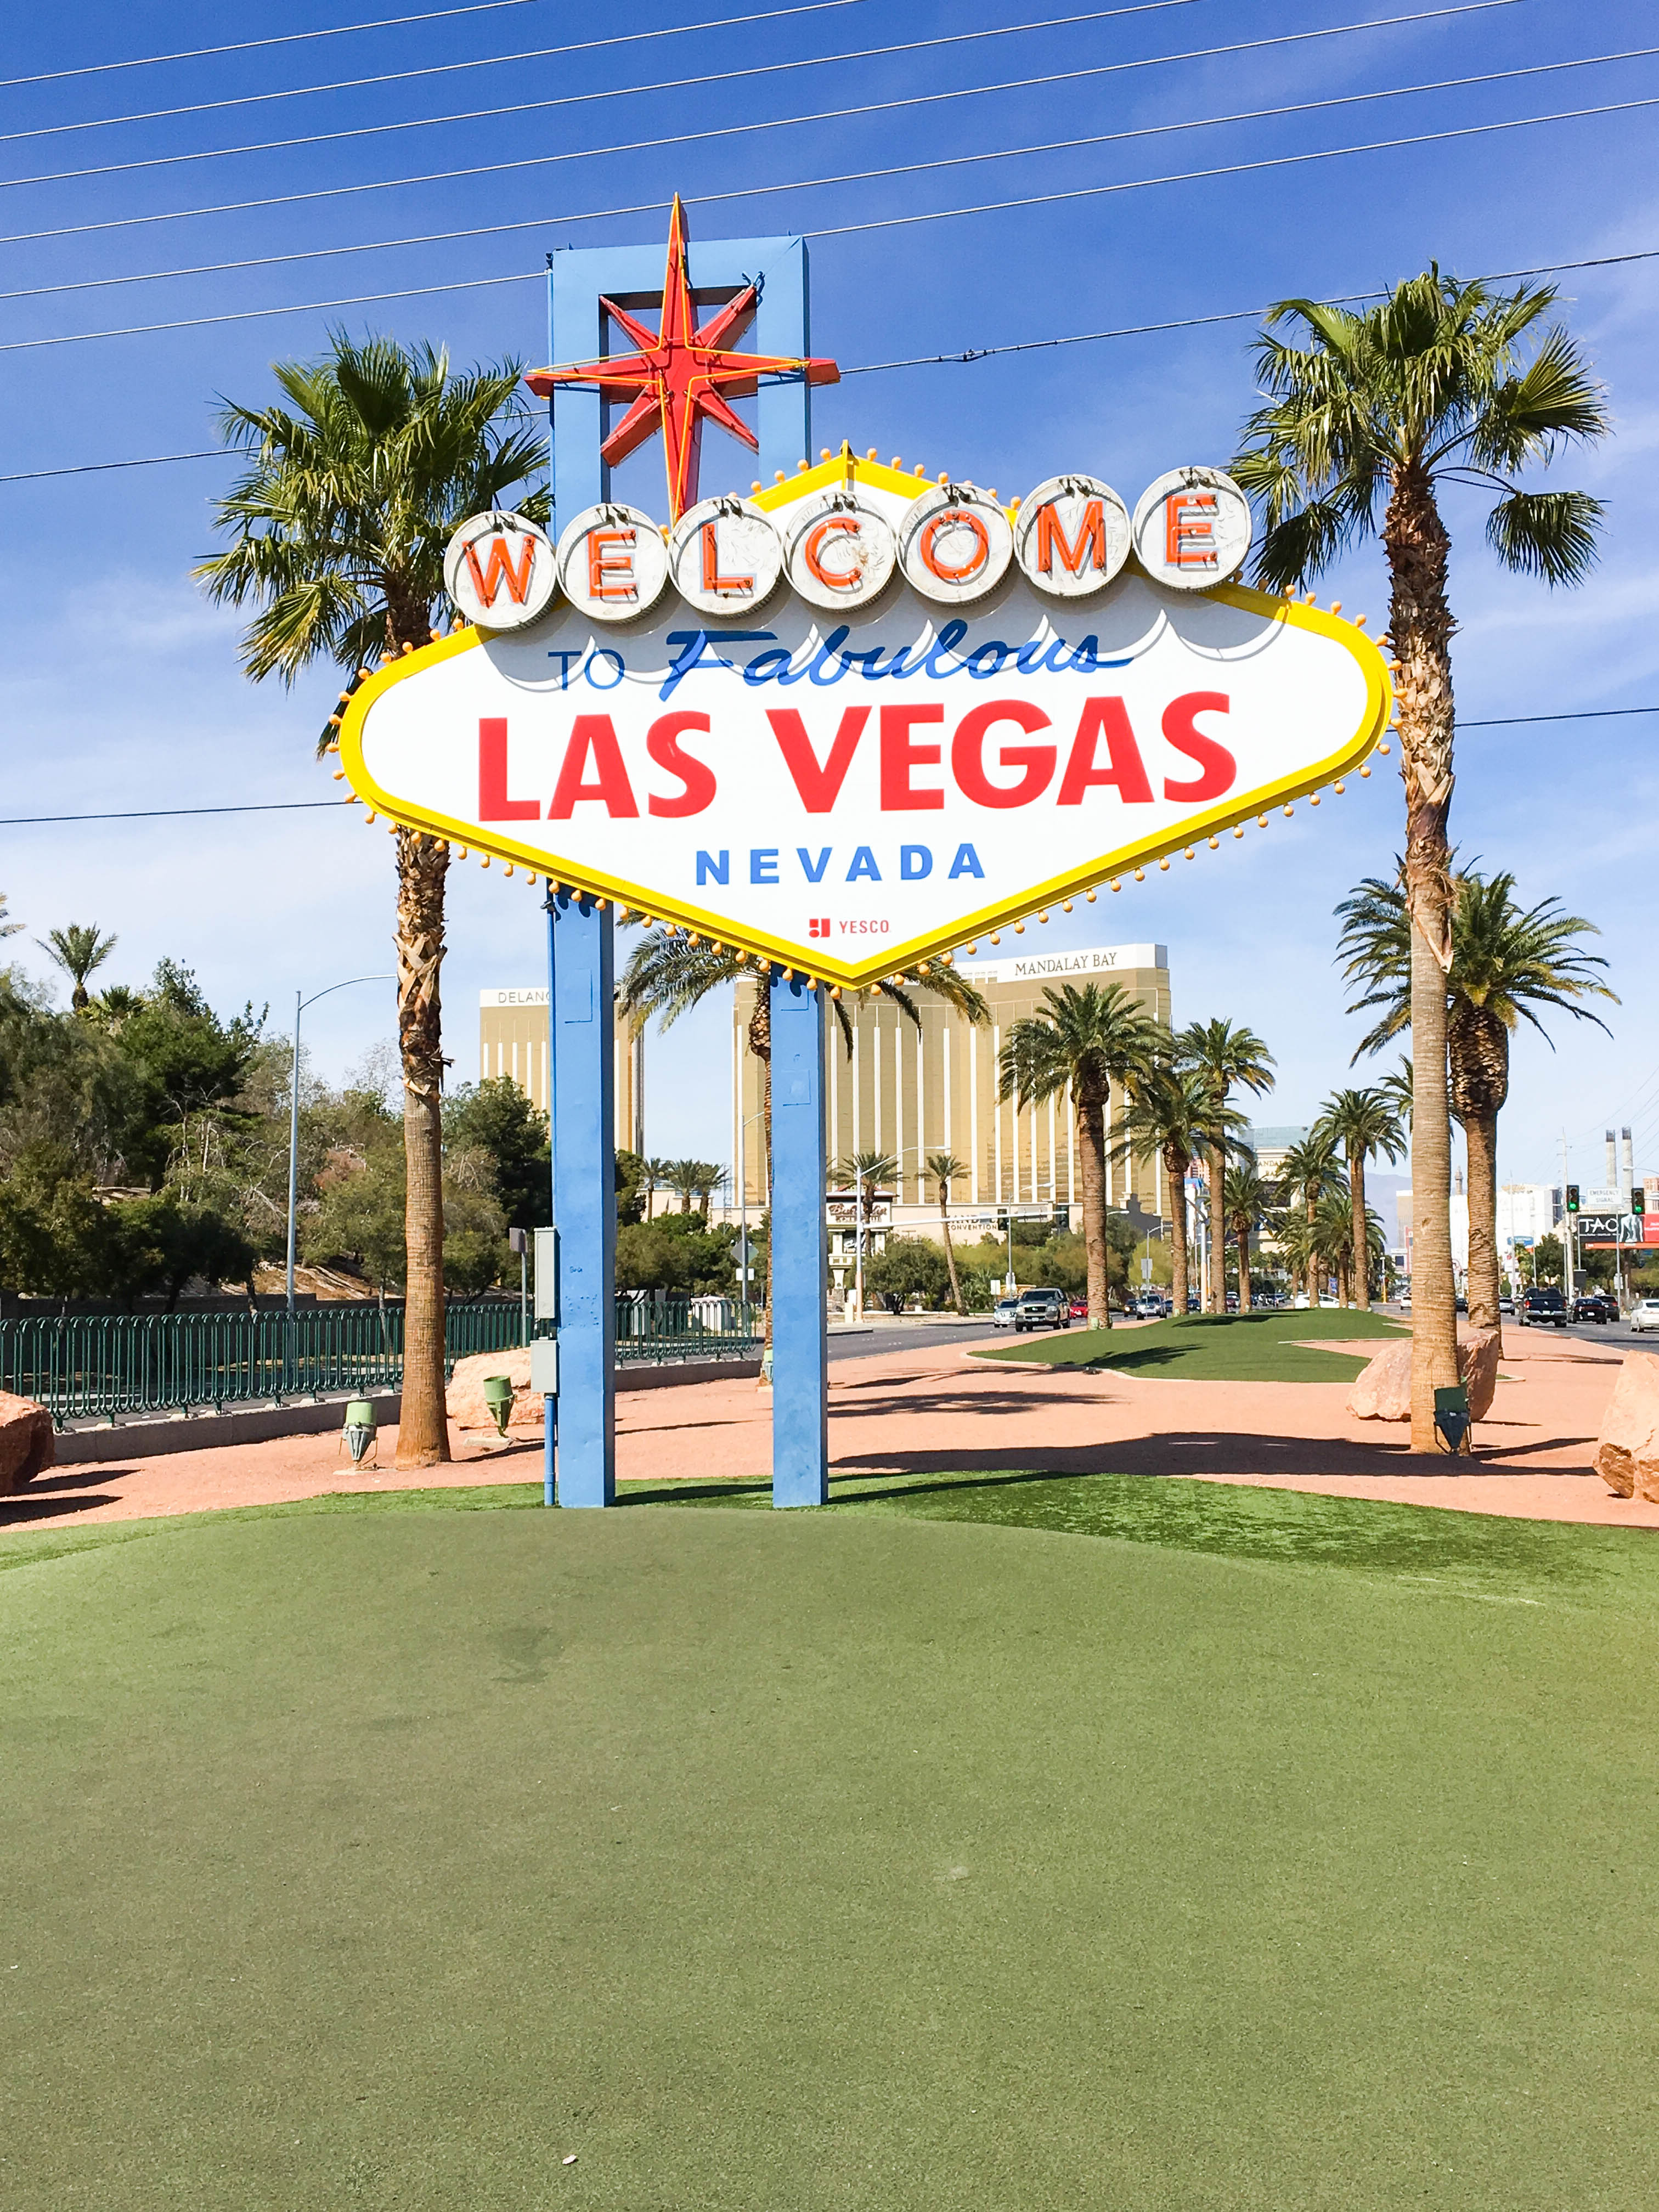 Las Vegas Sign 